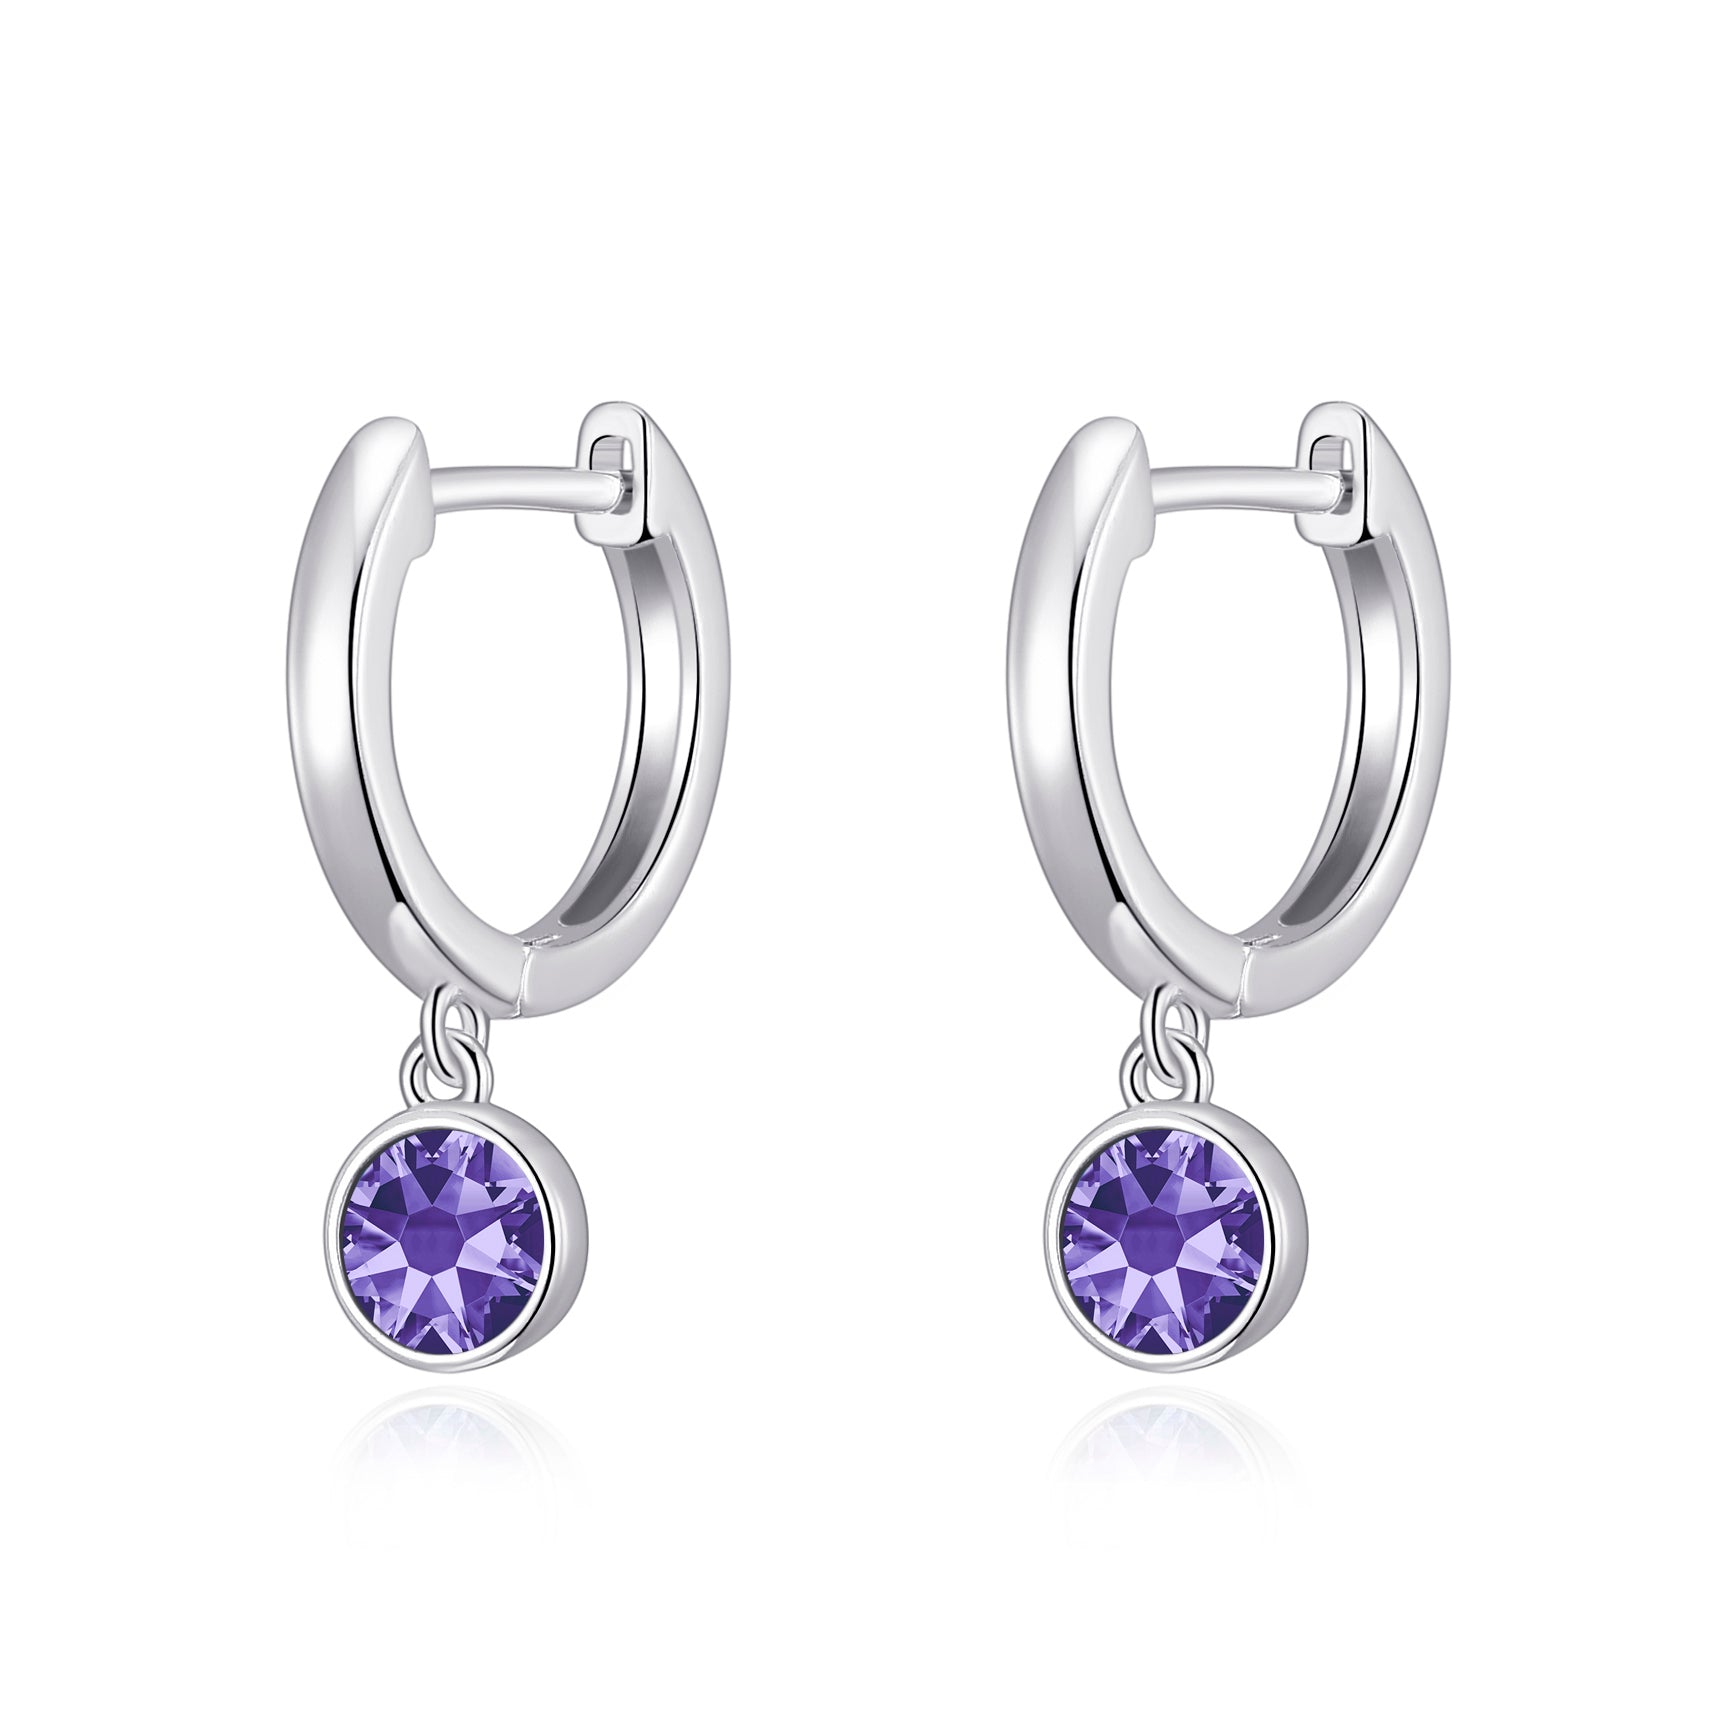 Light Purple Crystal Hoop Earrings Created with Zircondia® Crystals by Philip Jones Jewellery